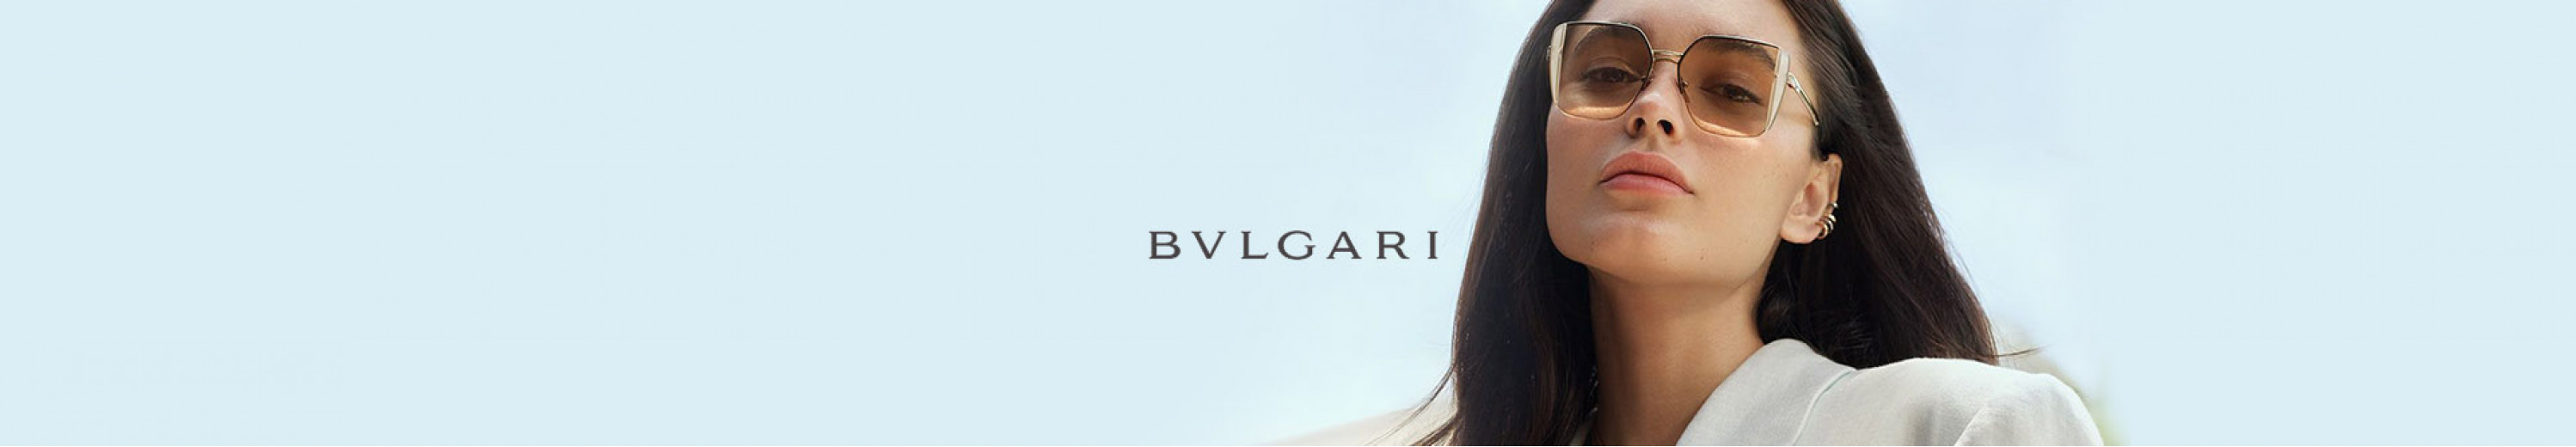 Bvlgari b.zero1 Eyewear Collection